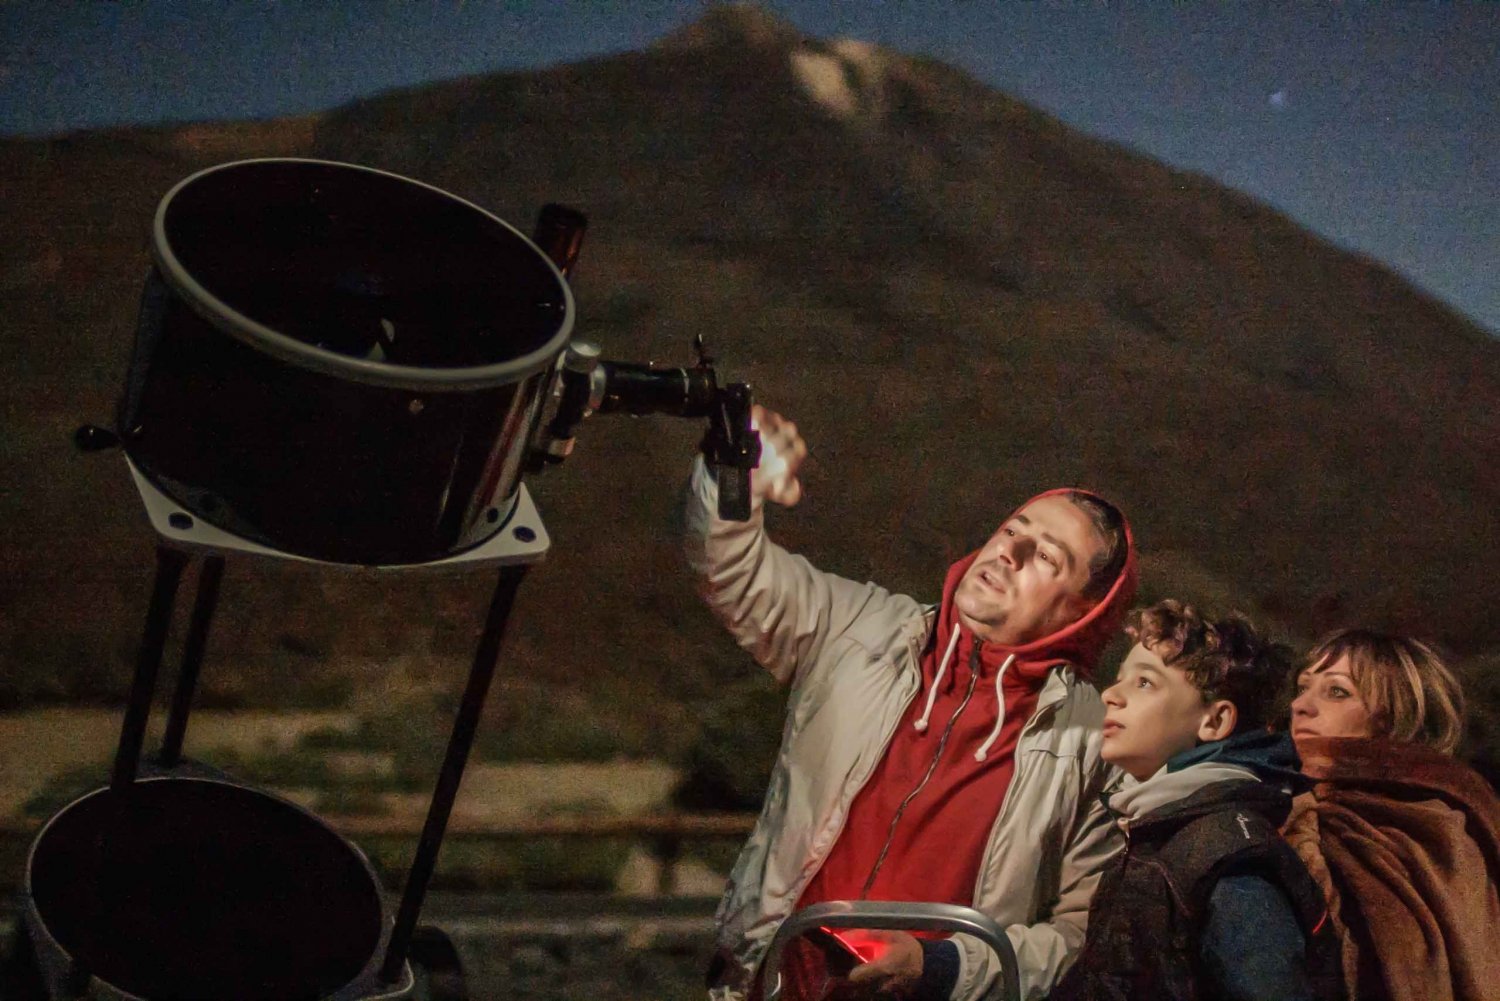 Teide National Park: Guided Large Telescope Stargazing Tour